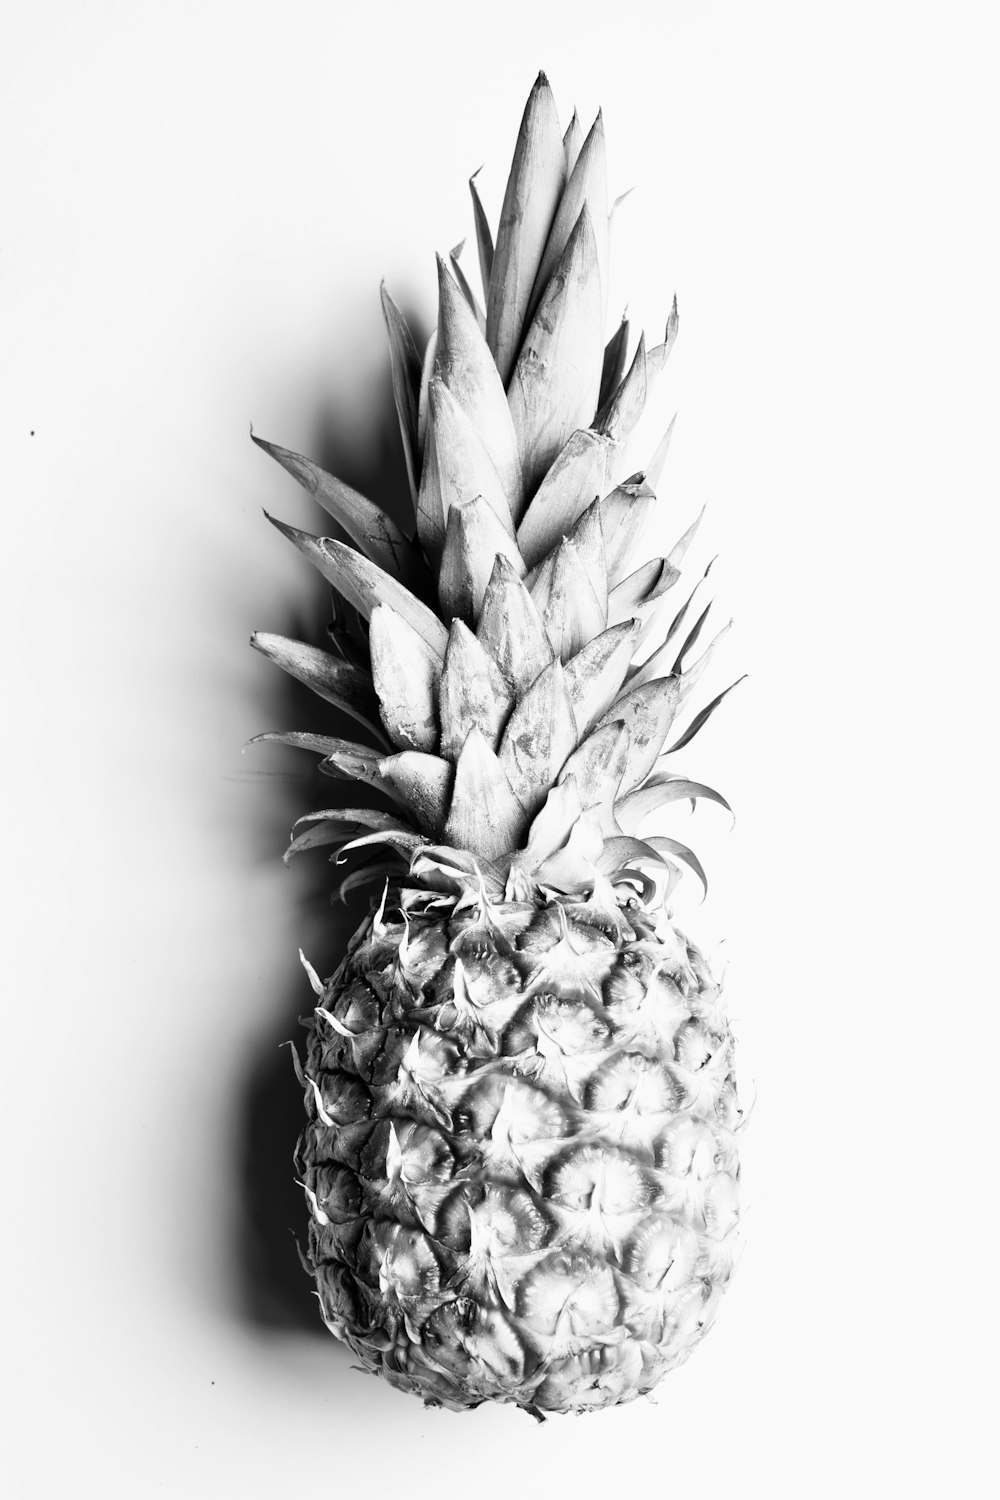 pineapple fruit on white surface